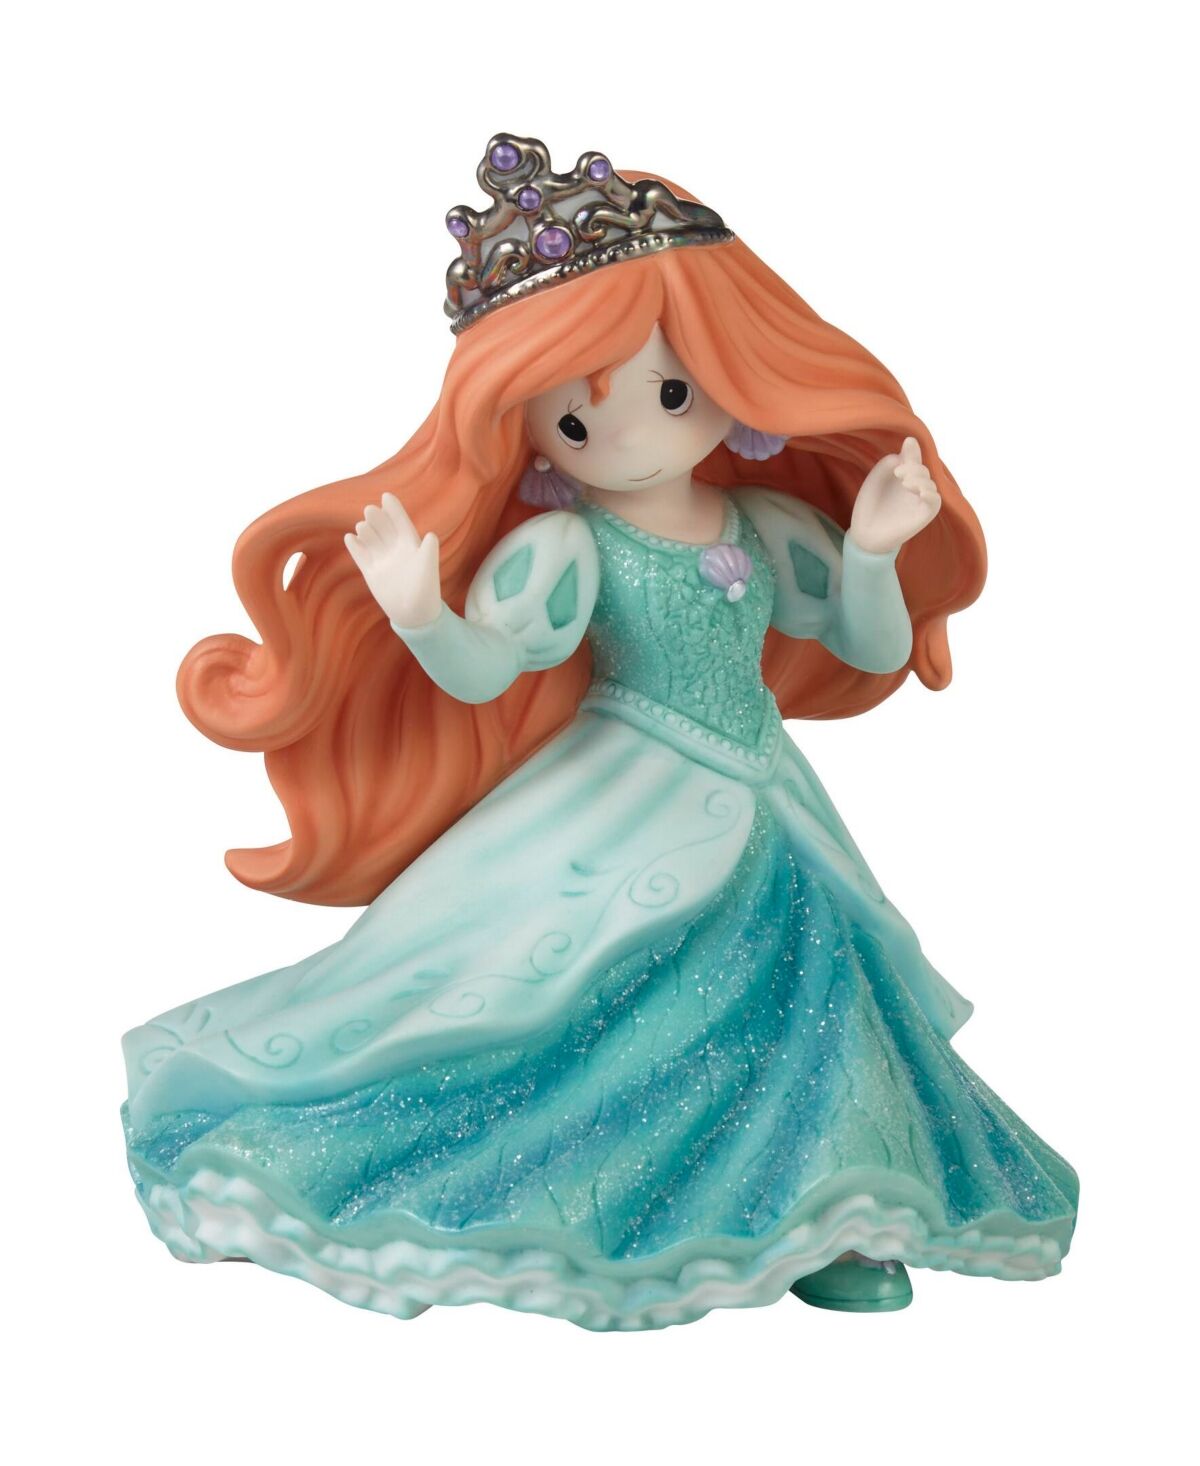 Precious Moments 100th Anniversary Celebration Disney 100 Ariel Bisque Porcelain Limited Edition Figurine - Multicolored